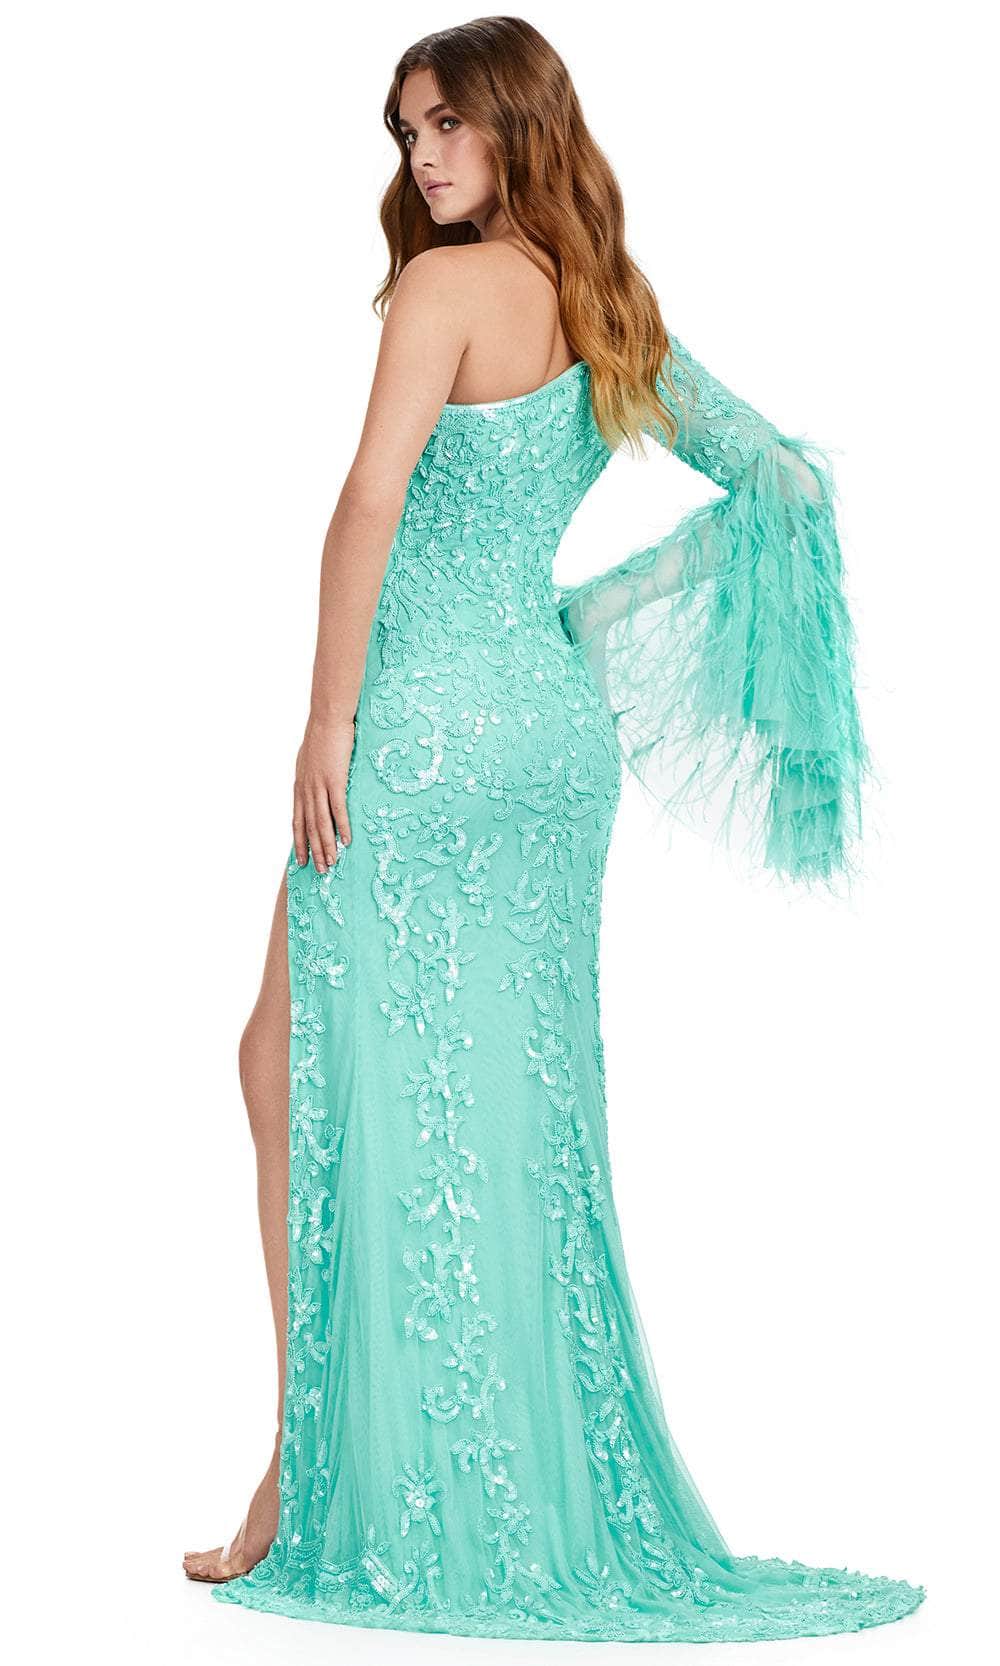 Ashley Lauren 11452 - Sequin Pattern Prom Dress Prom Dresses